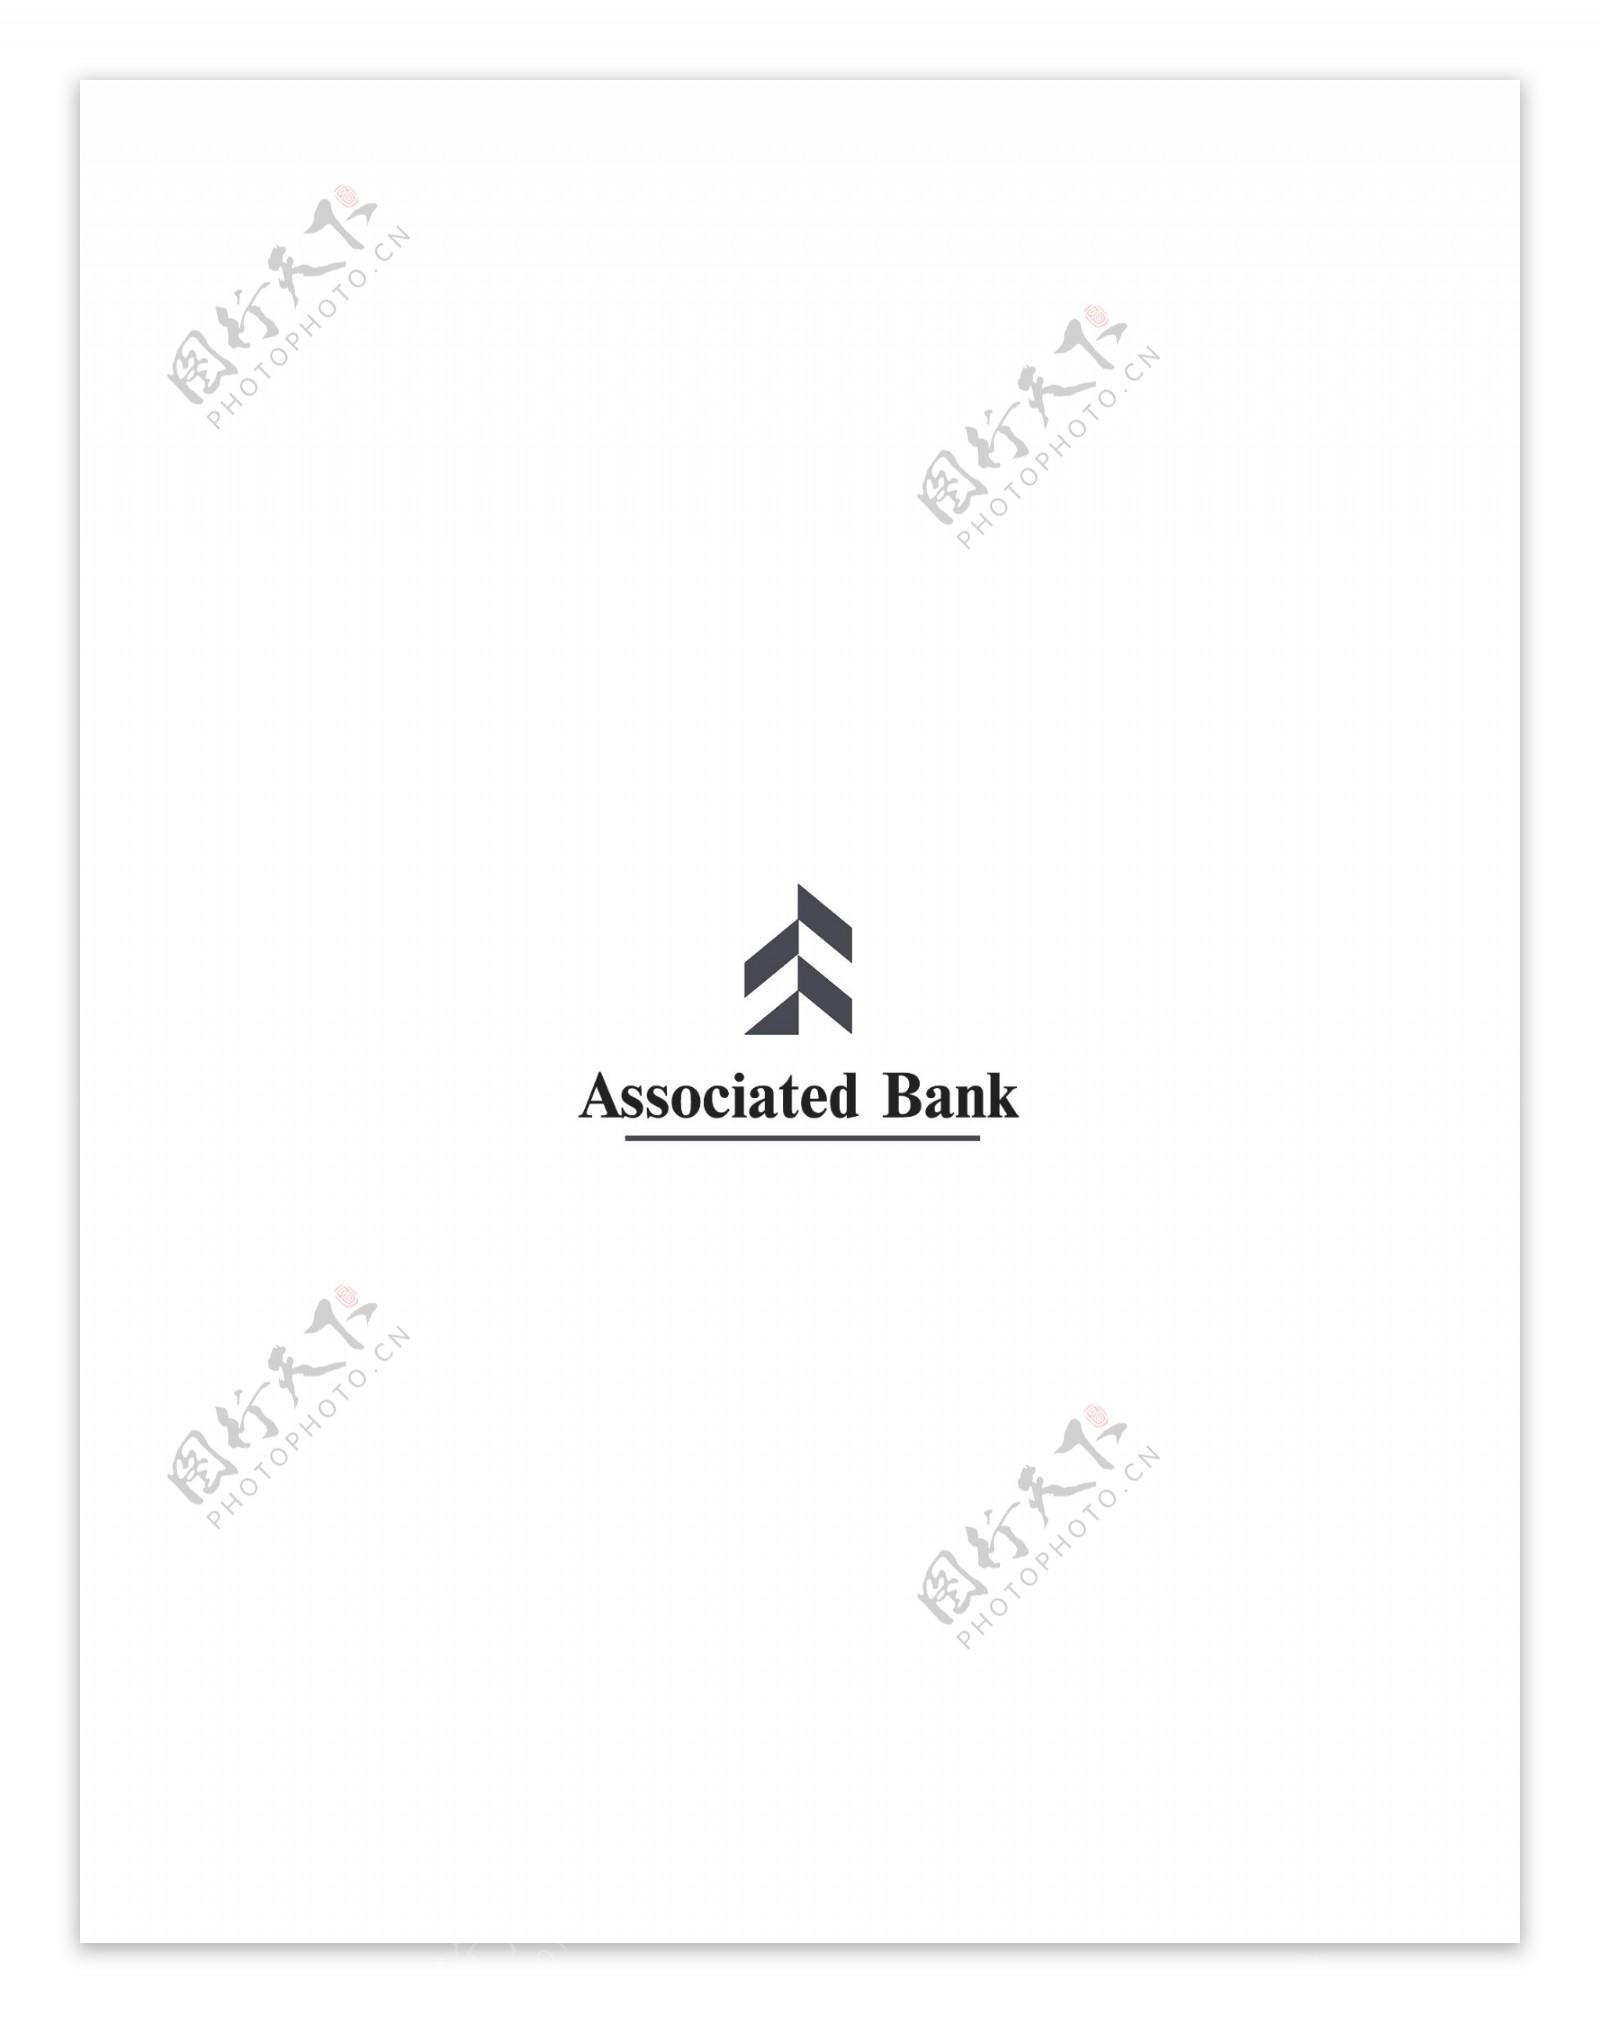 AssociatedBanklogo设计欣赏IT高科技公司标志AssociatedBank下载标志设计欣赏